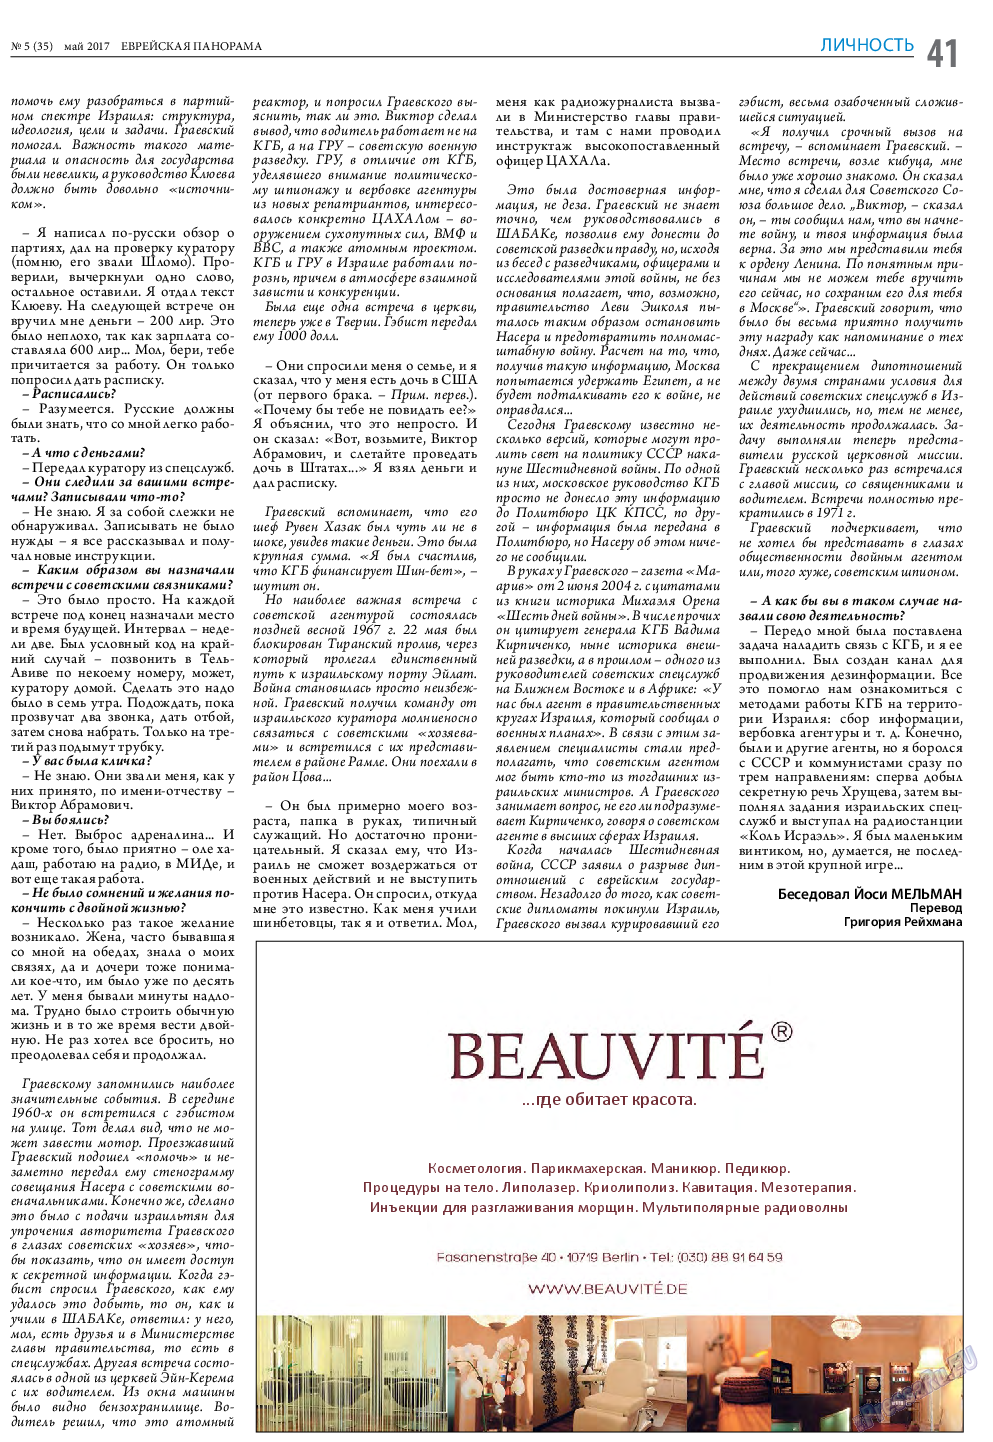 Еврейская панорама, газета. 2017 №5 стр.41